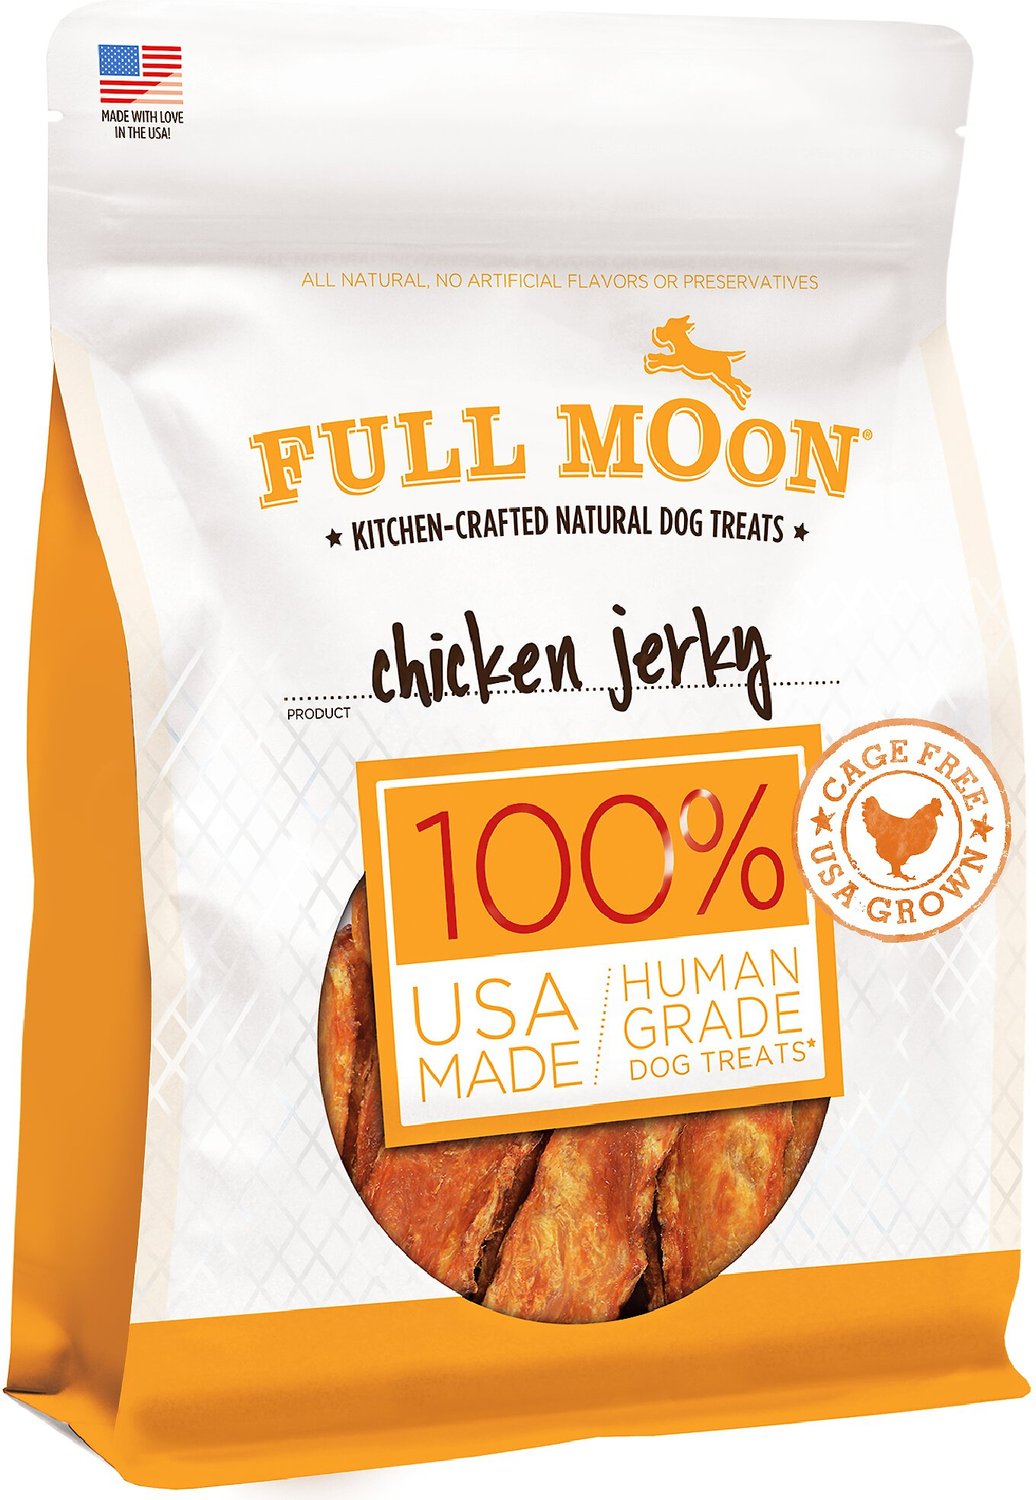 FULL MOON Chicken Jerky Dog Treats, 12 